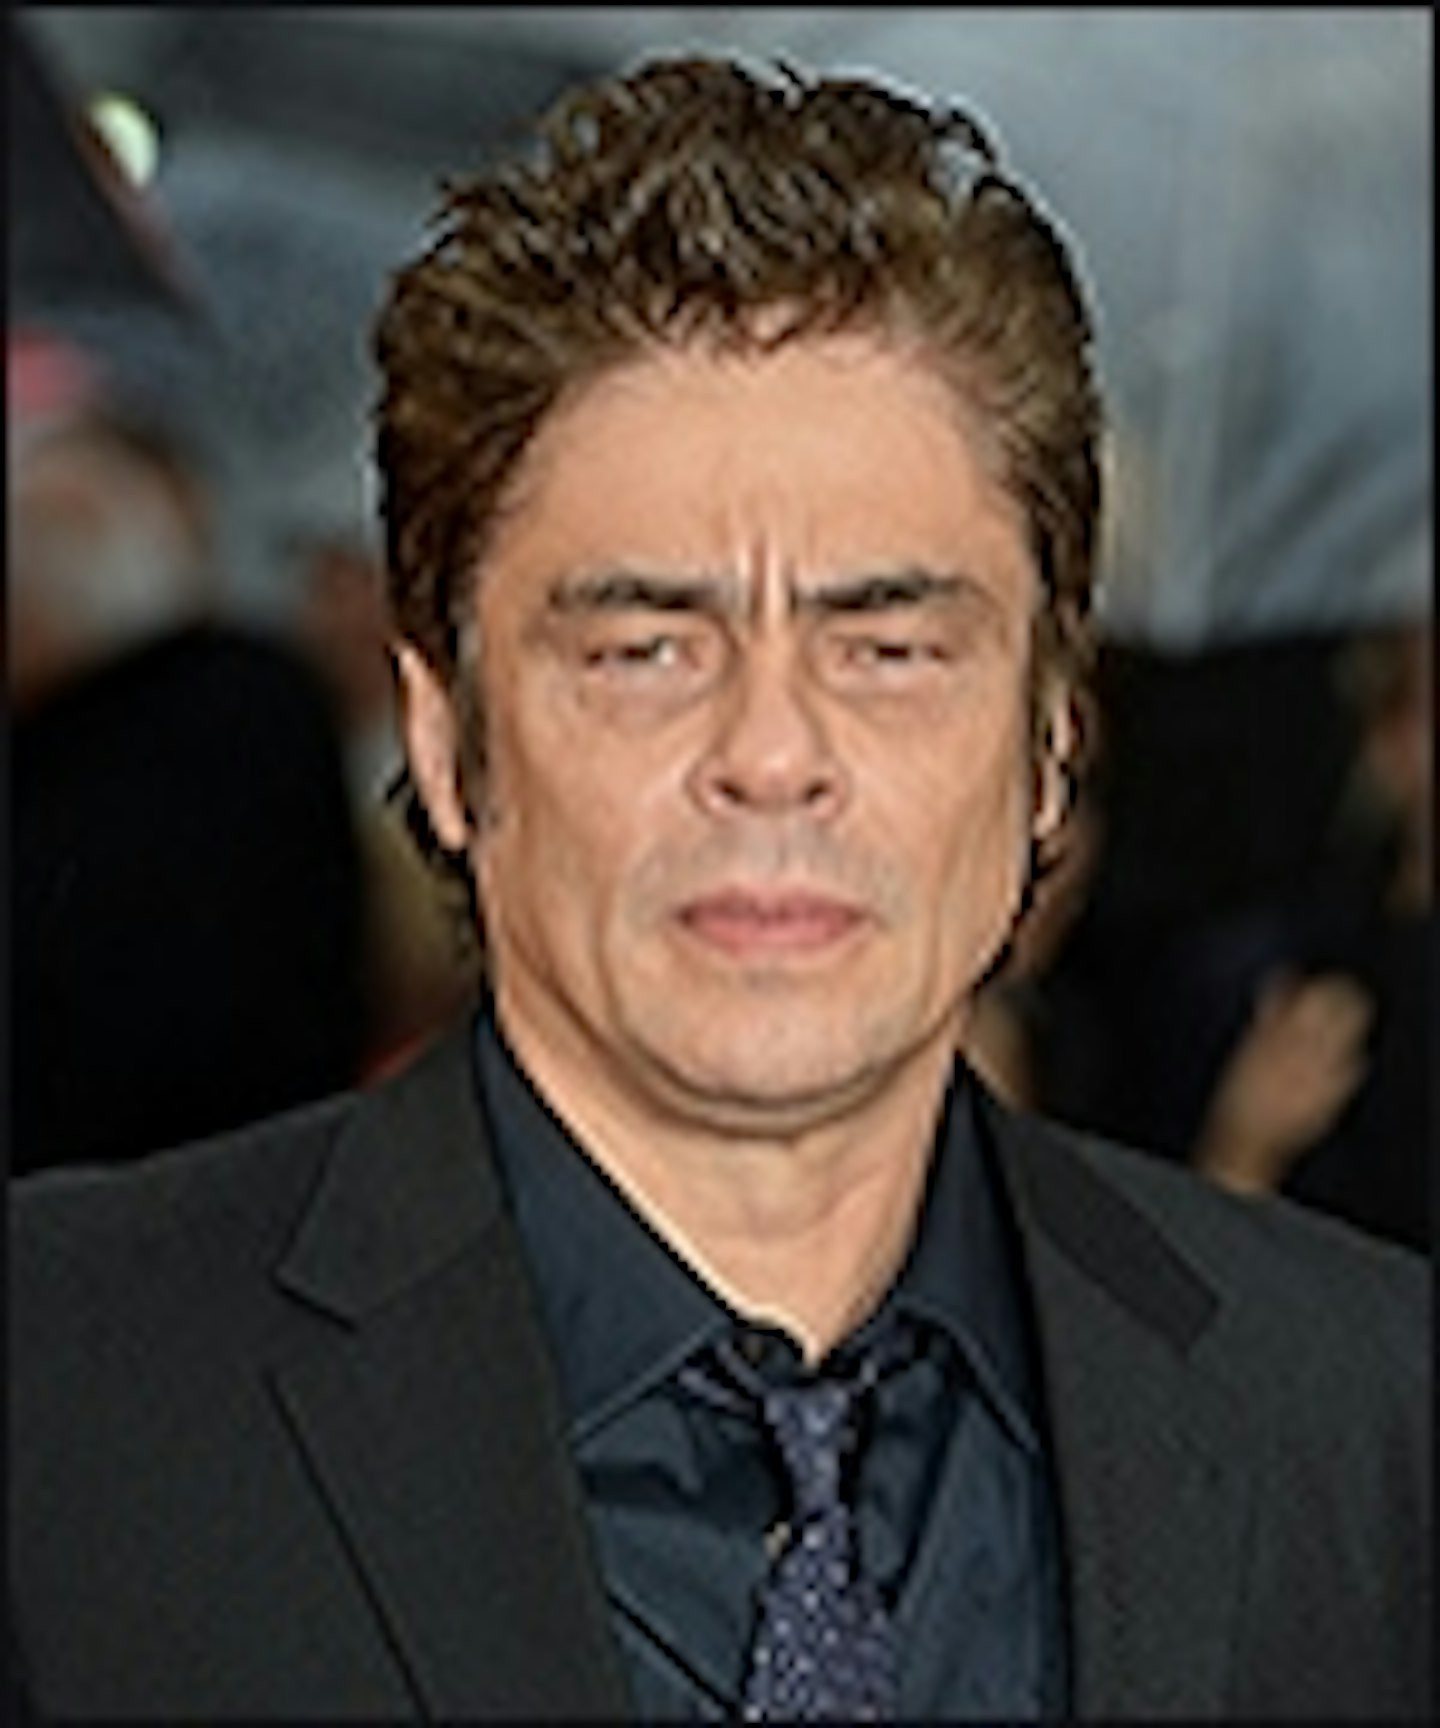 Benicio Del Toro Talks Star Wars: Episode VIII